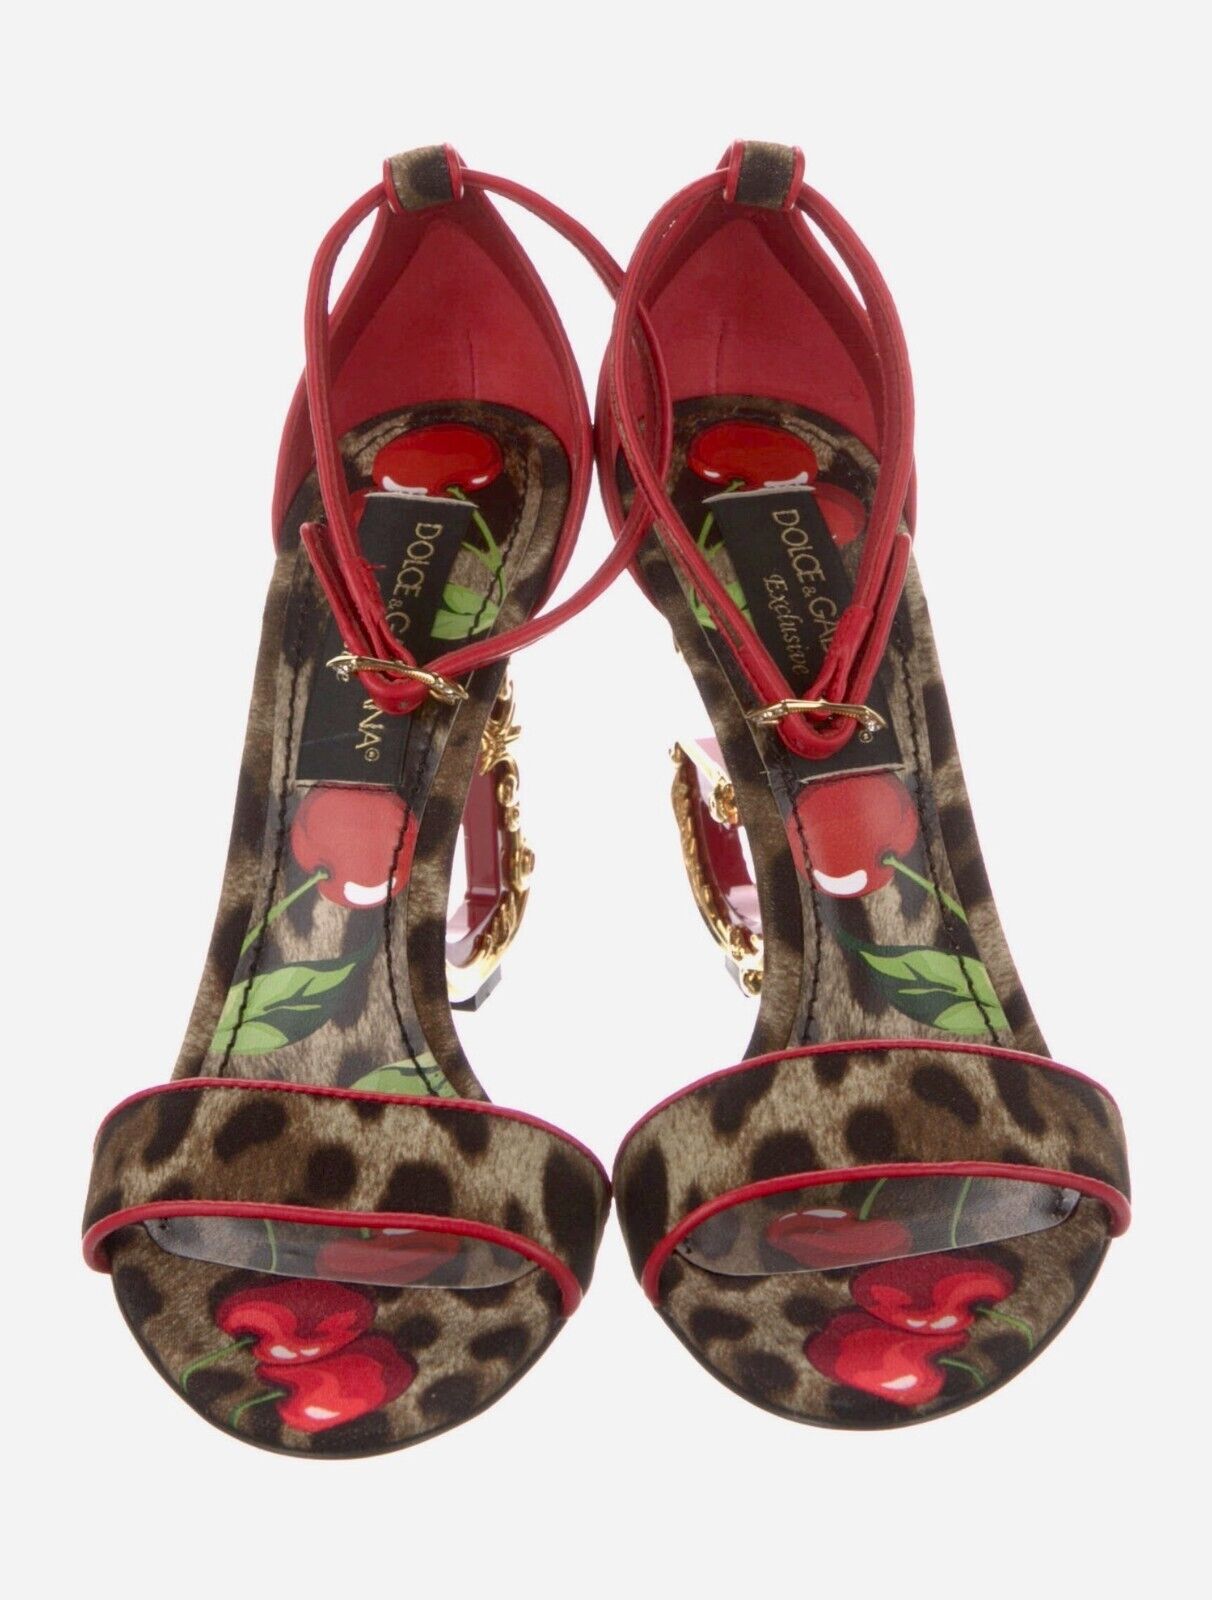 Dolce Gabbana Animal Print /Cherries Gladiator Sandals Size: 7 | eBay